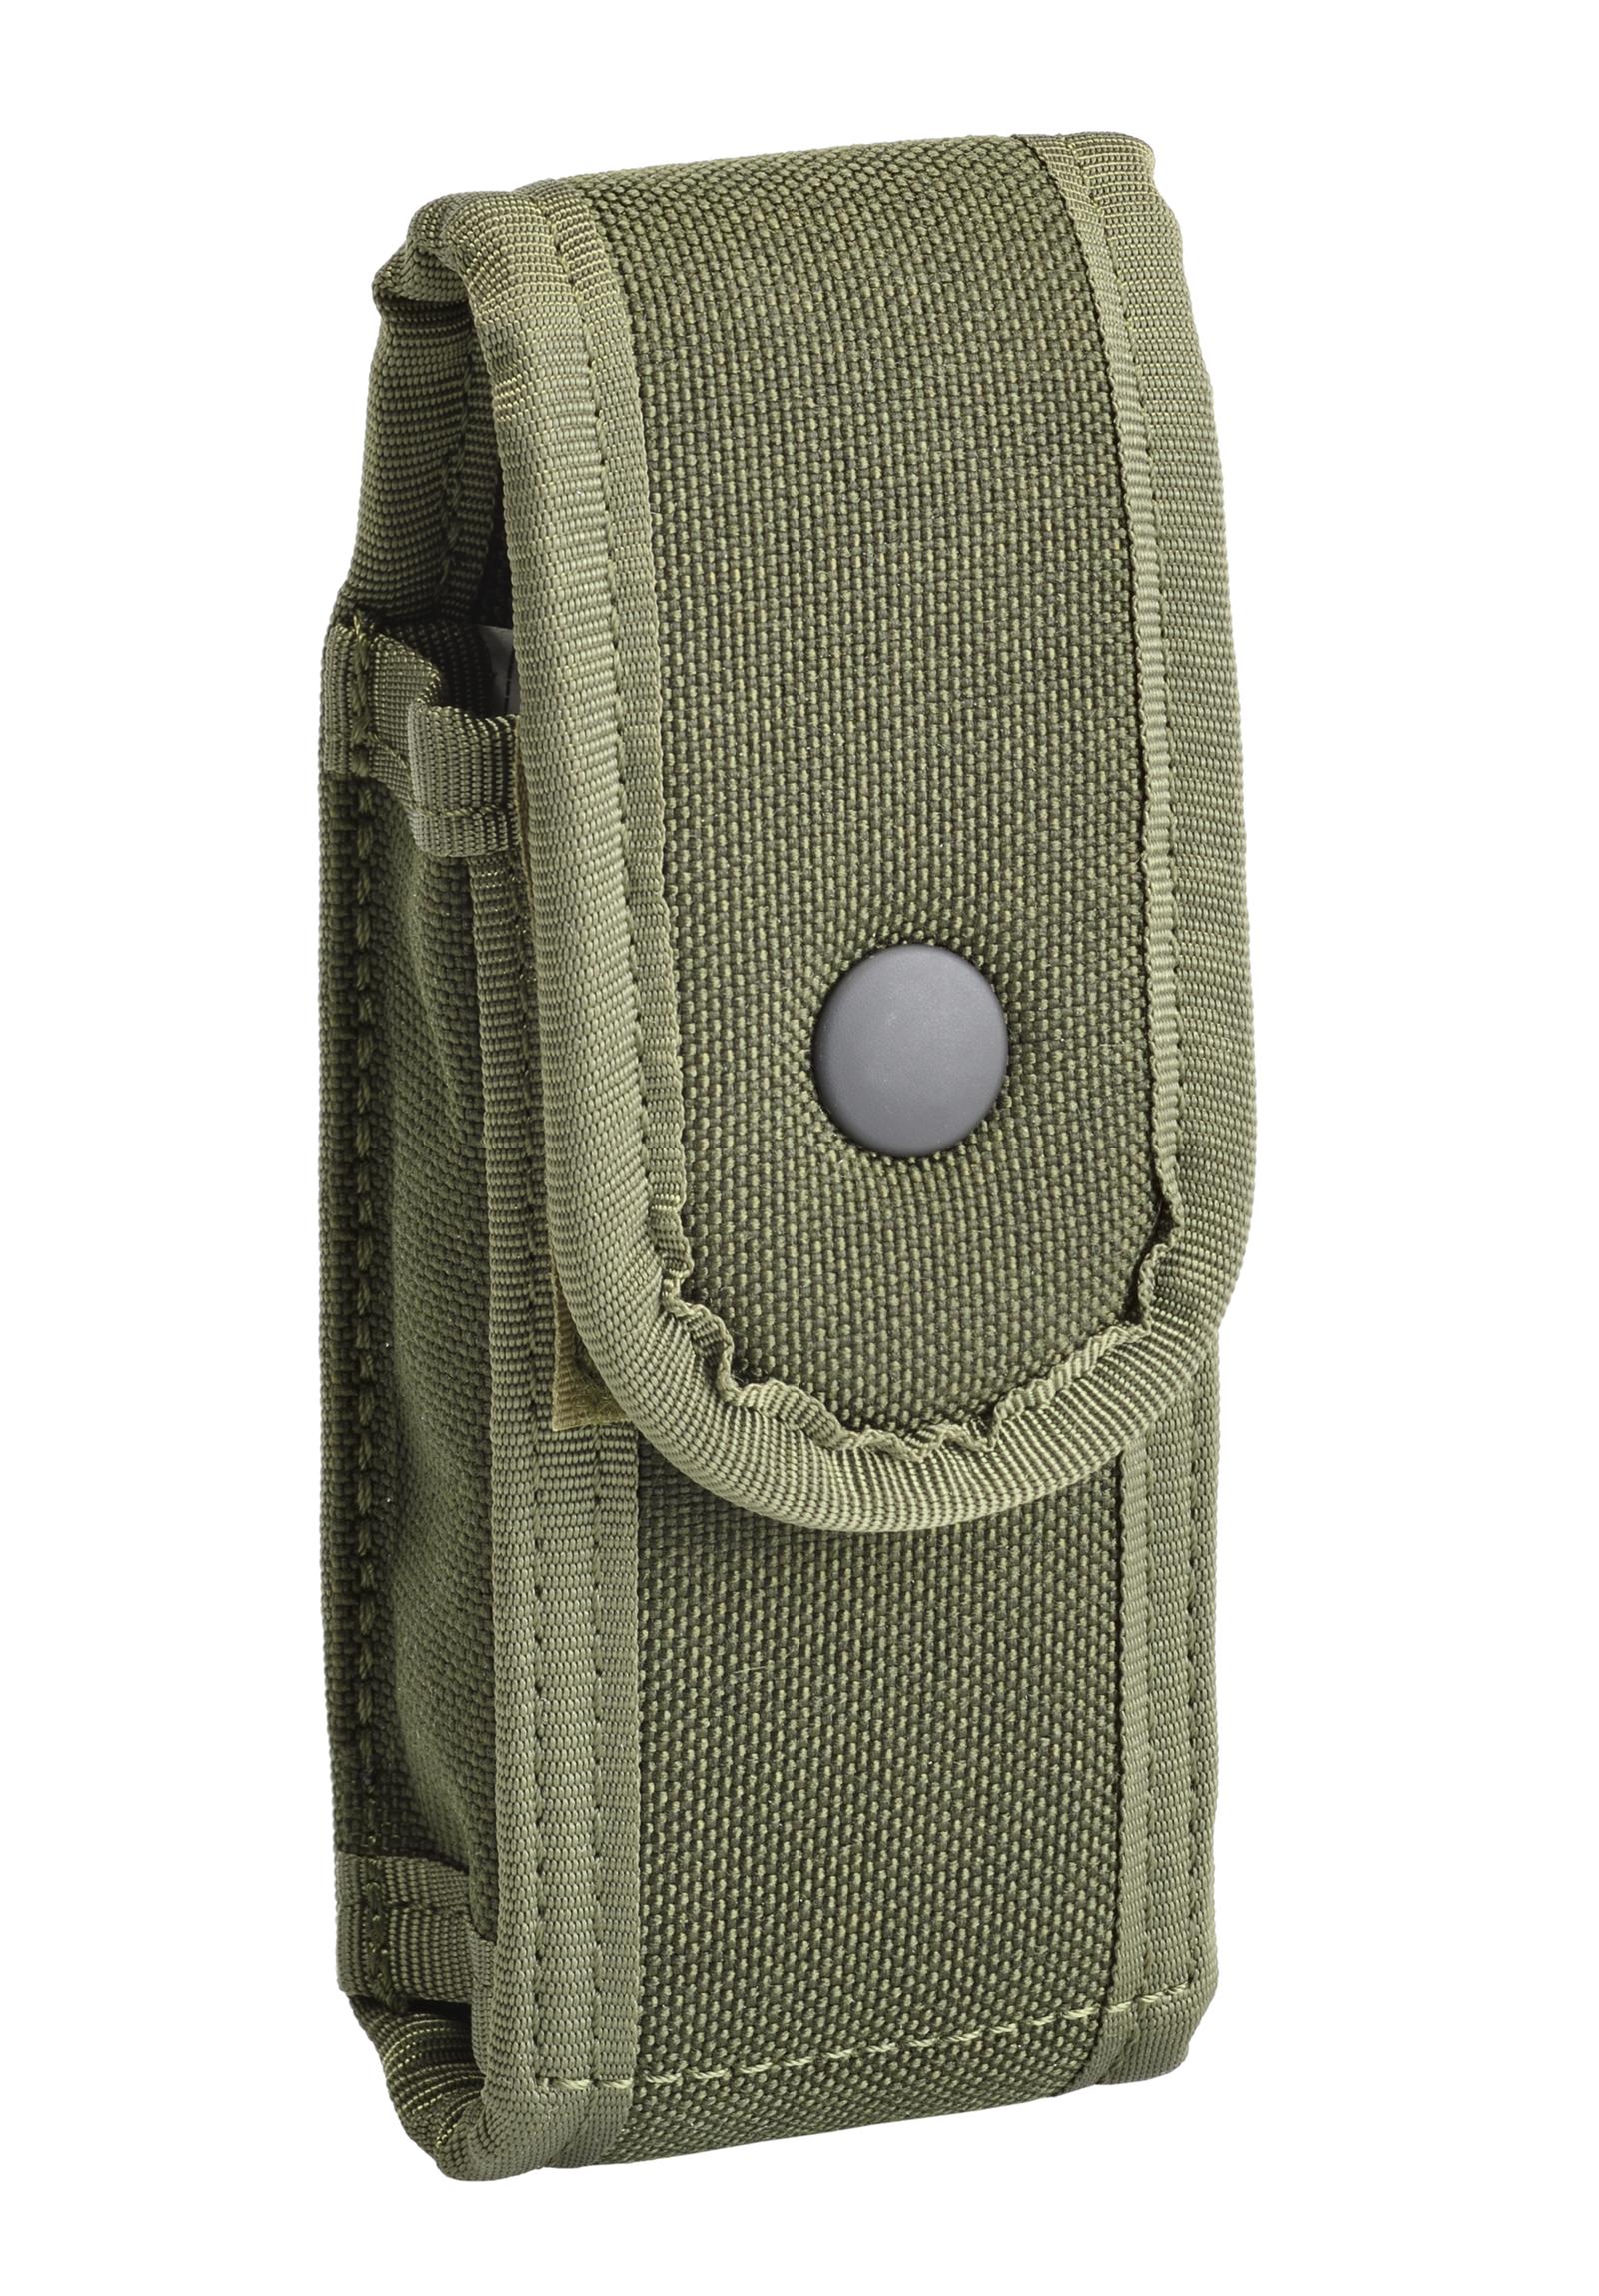 Details about   BERETTA Grip-Tac Molle Tactical Nylon Double Magazine Pouch 